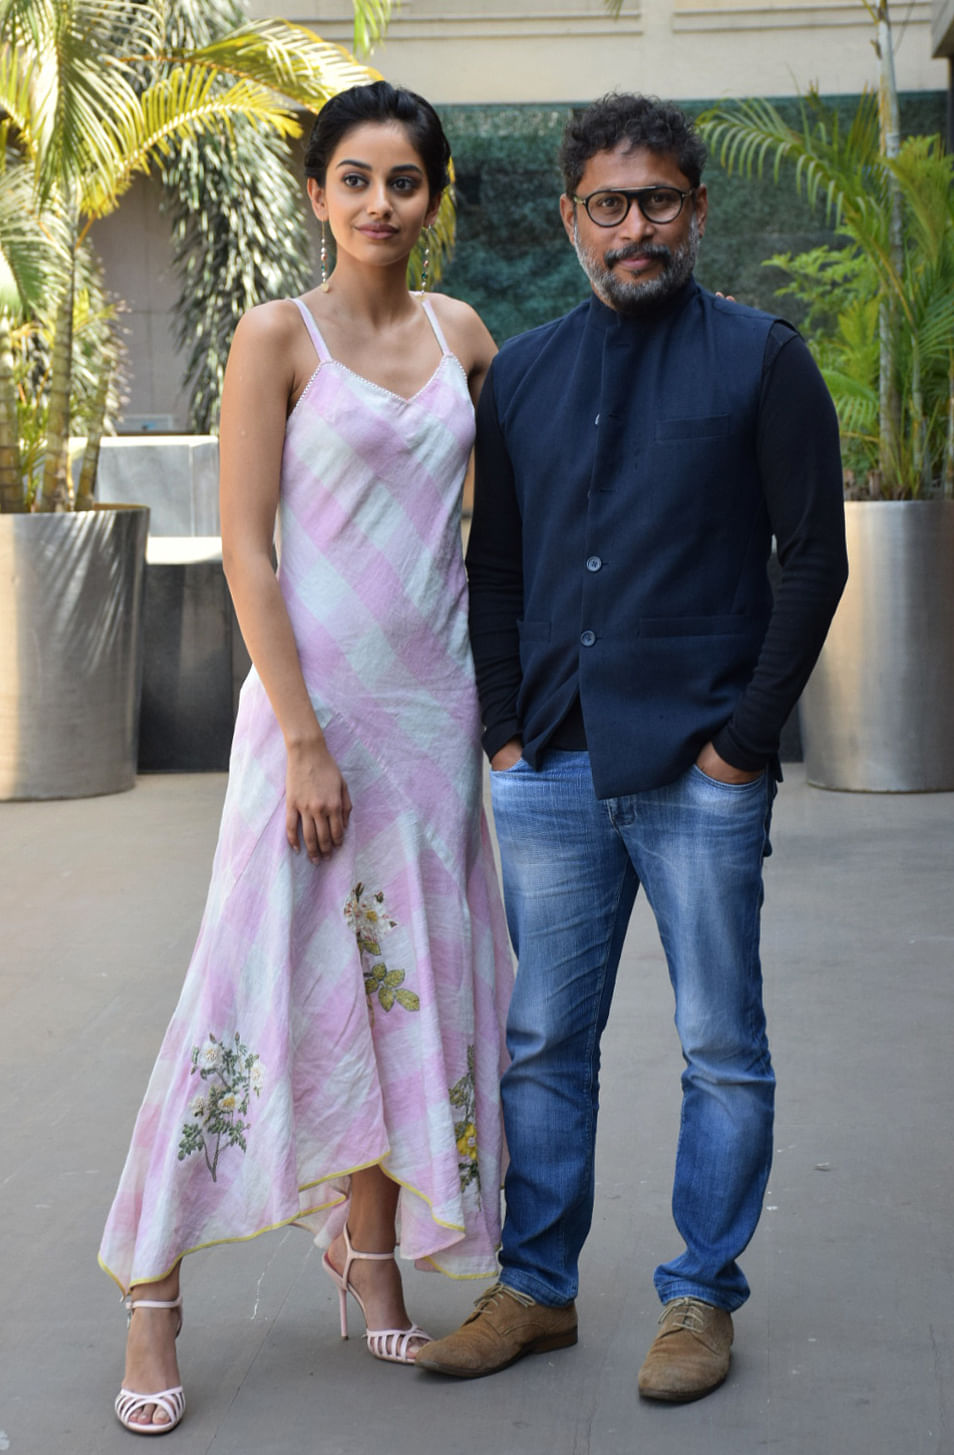 Shoojit Sircar opens up about casting Varun Dhawan and Banita Sandhu for ‘October’.